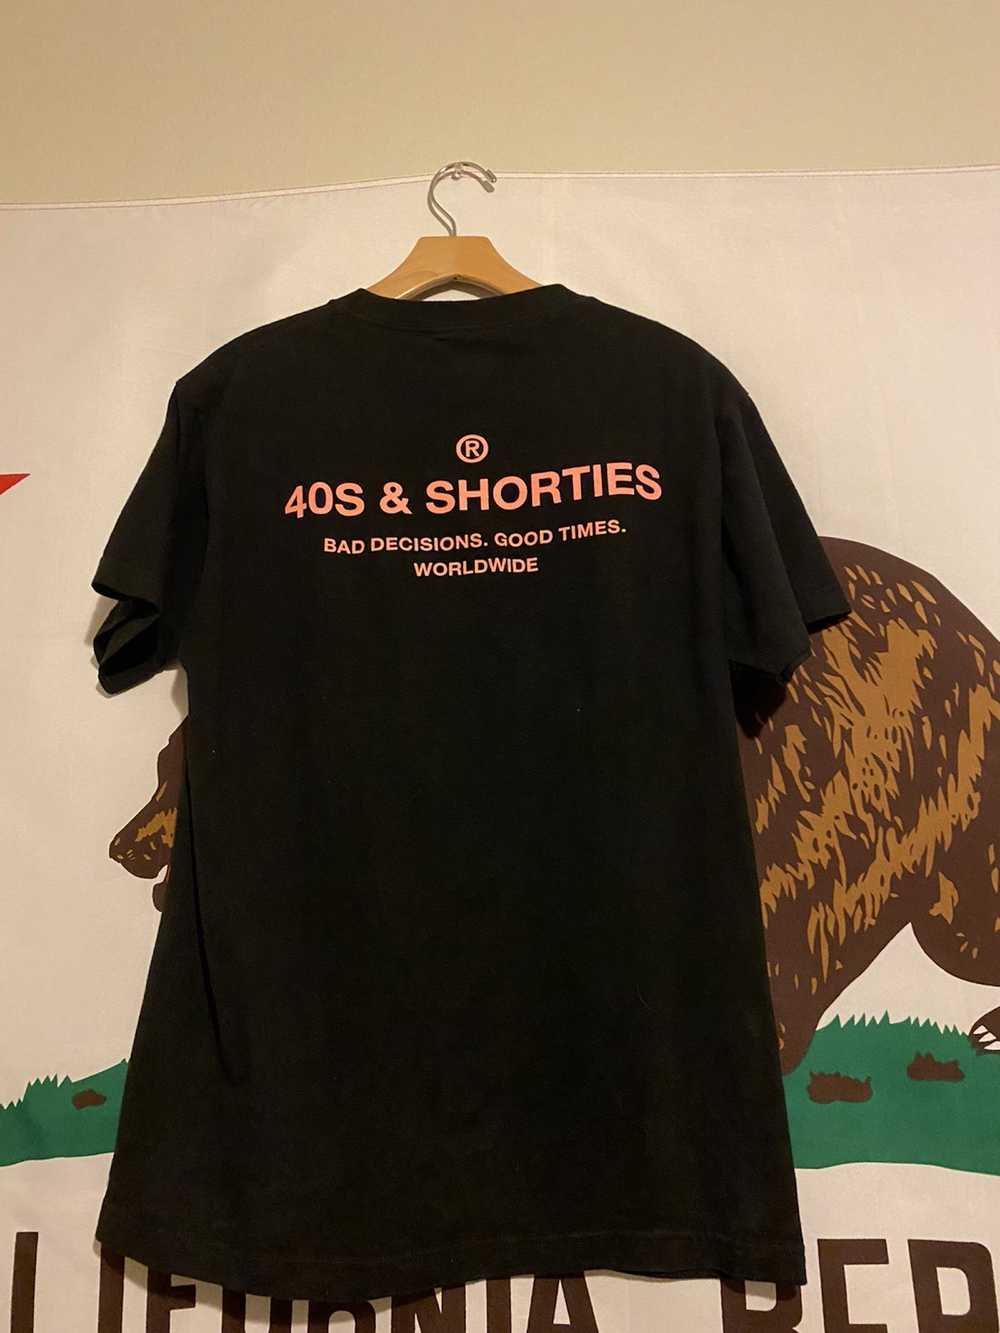 40's & Shorties 40’s & Shorties Tee - image 2